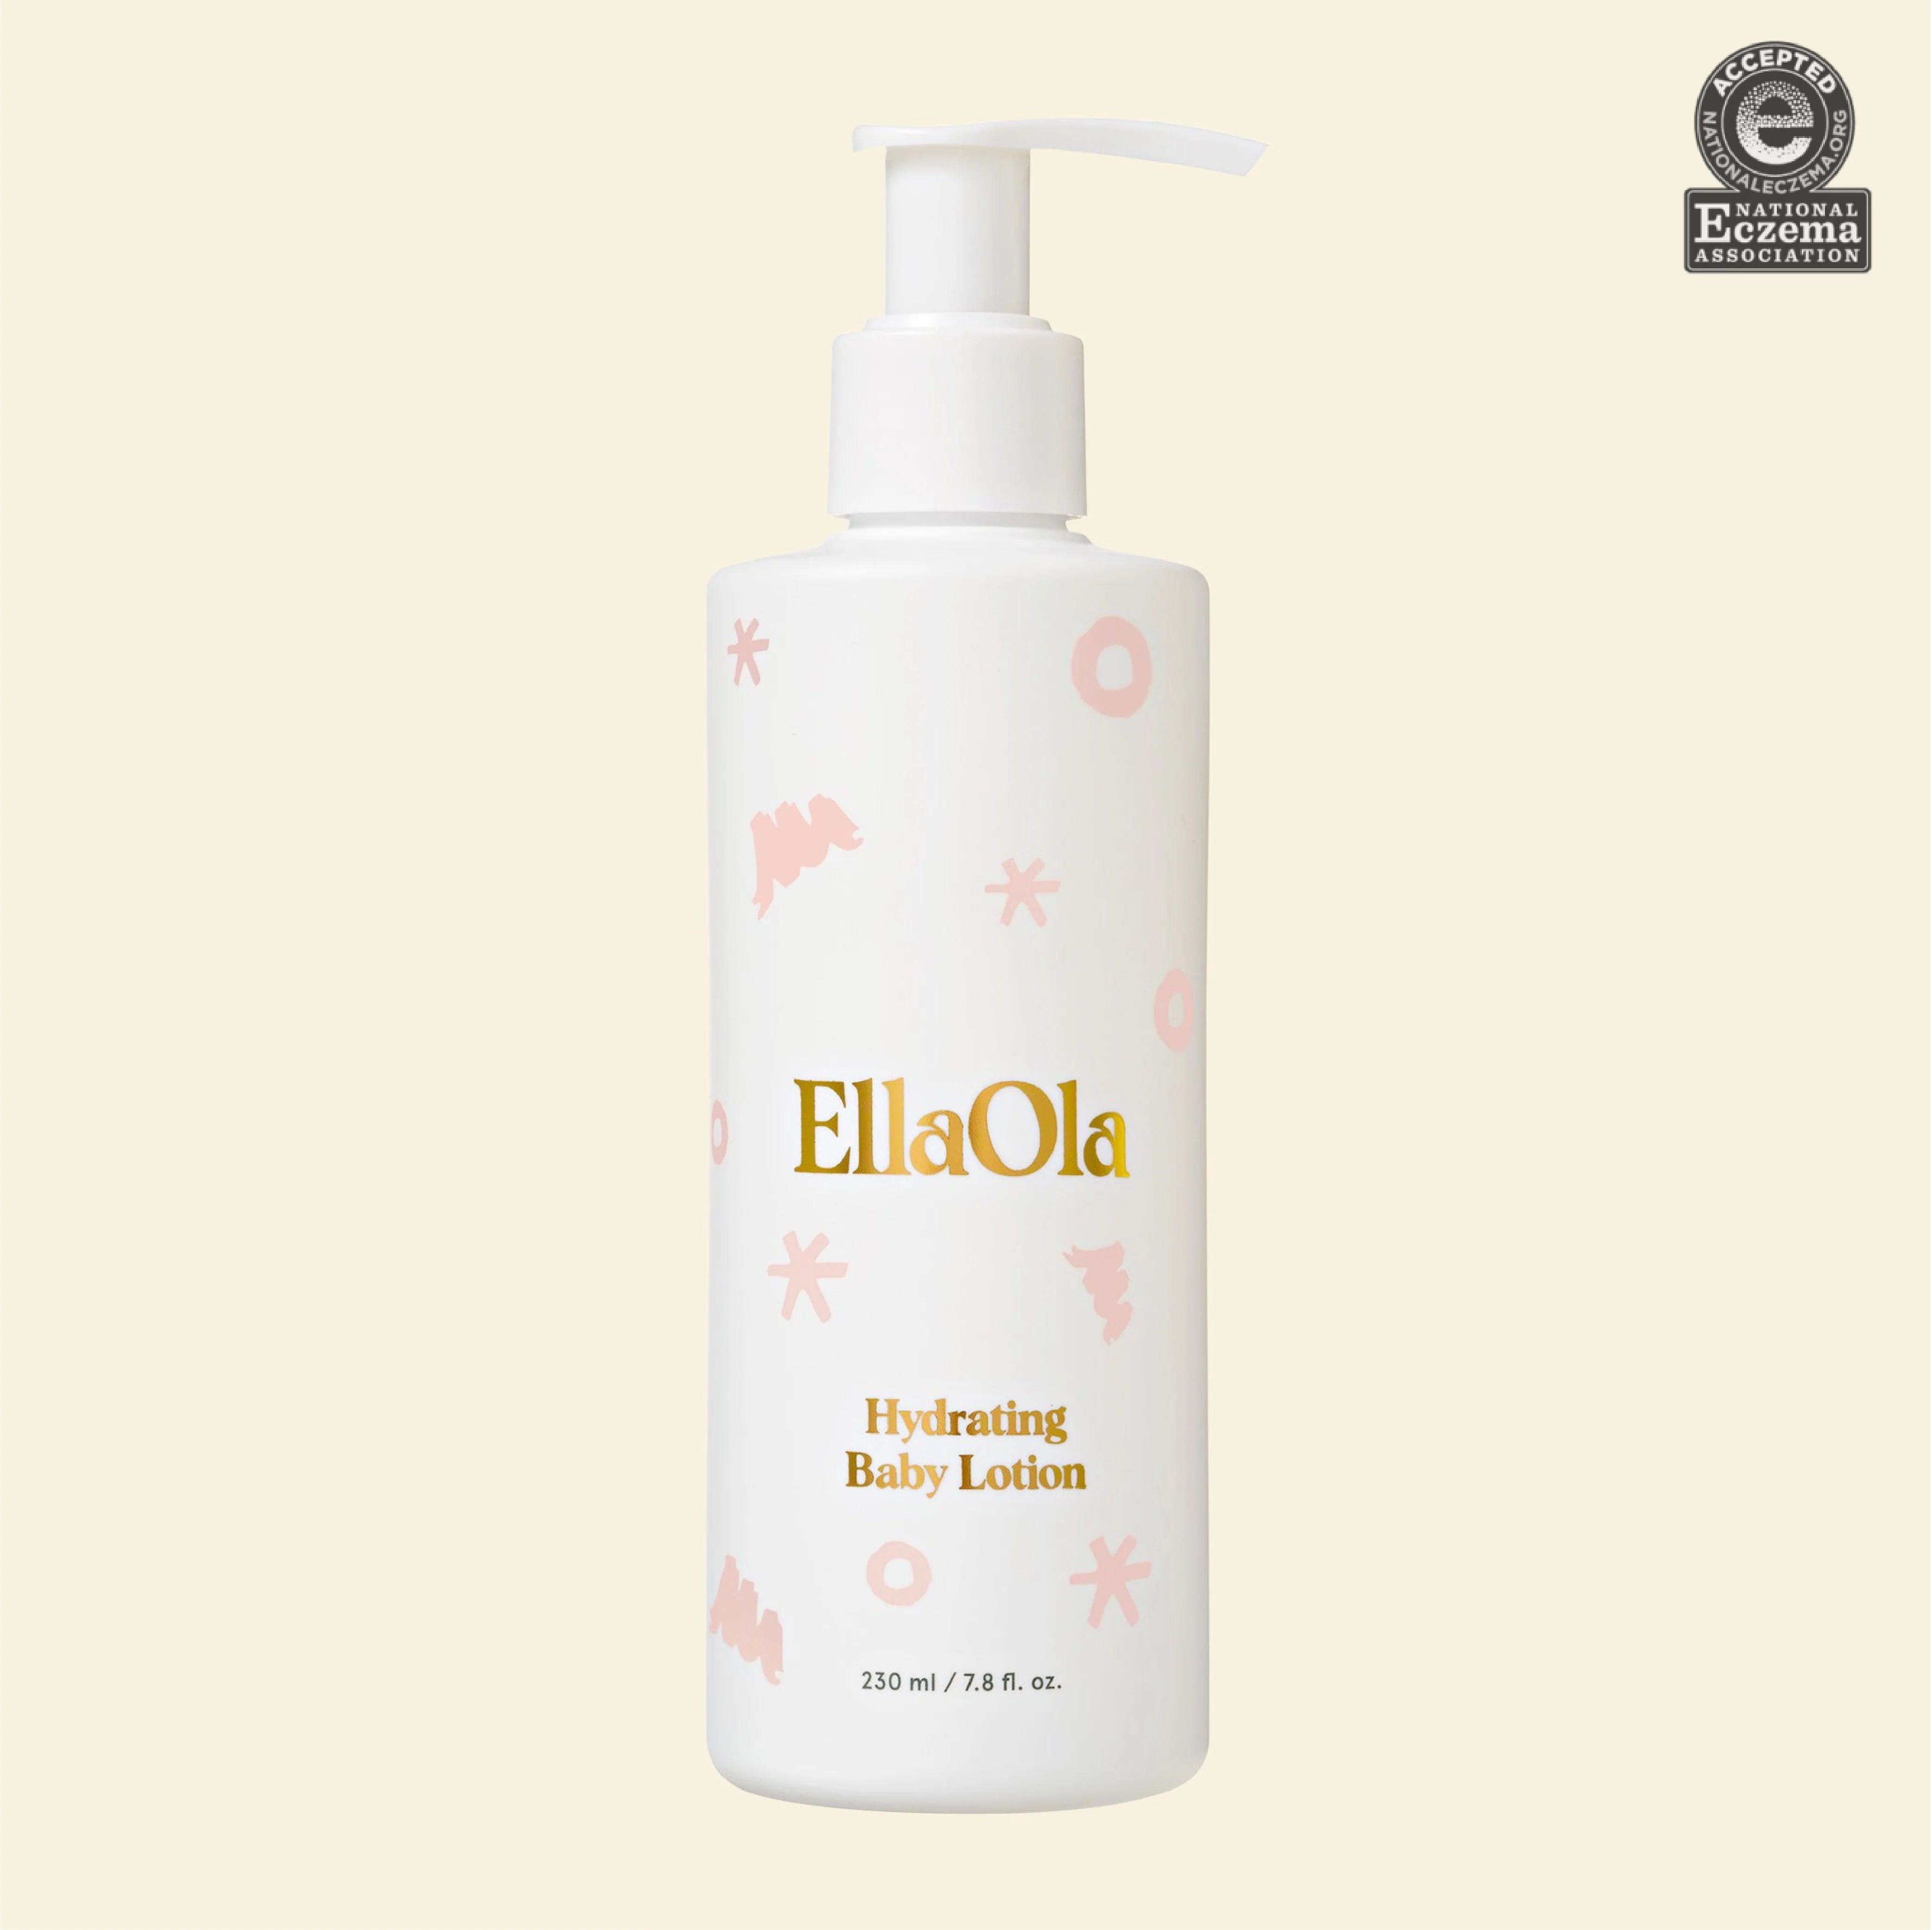 Hydrating Baby Lotion | EllaOla Brands Inc.